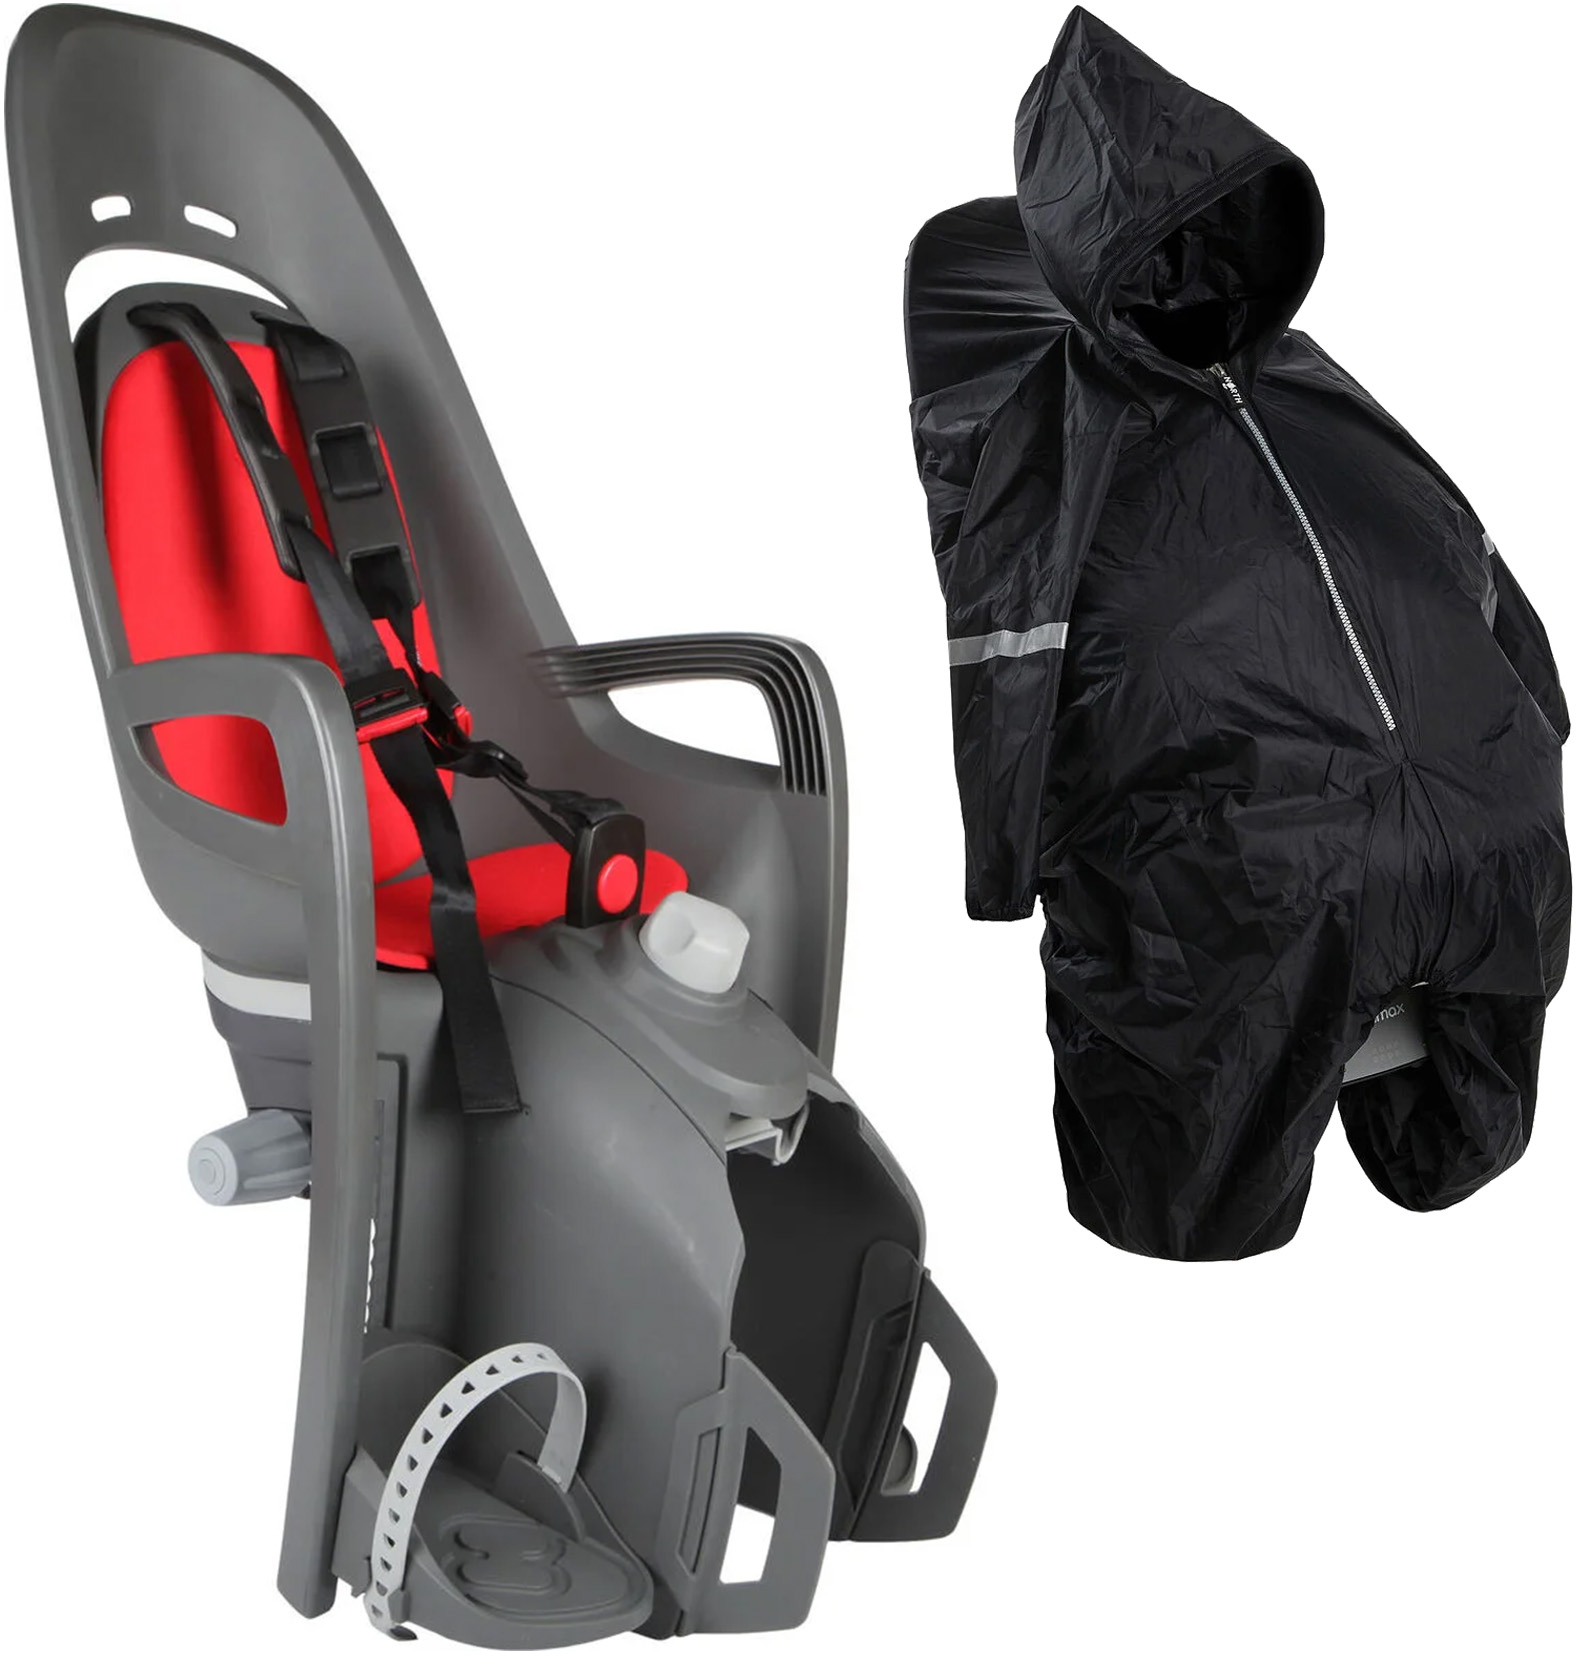 & Fahrradsitz inkl. Regenschutz, Hamax Kaufen Grey/Red/Black Relax Jollyroom Zenith | Gepäckträgerhalterung